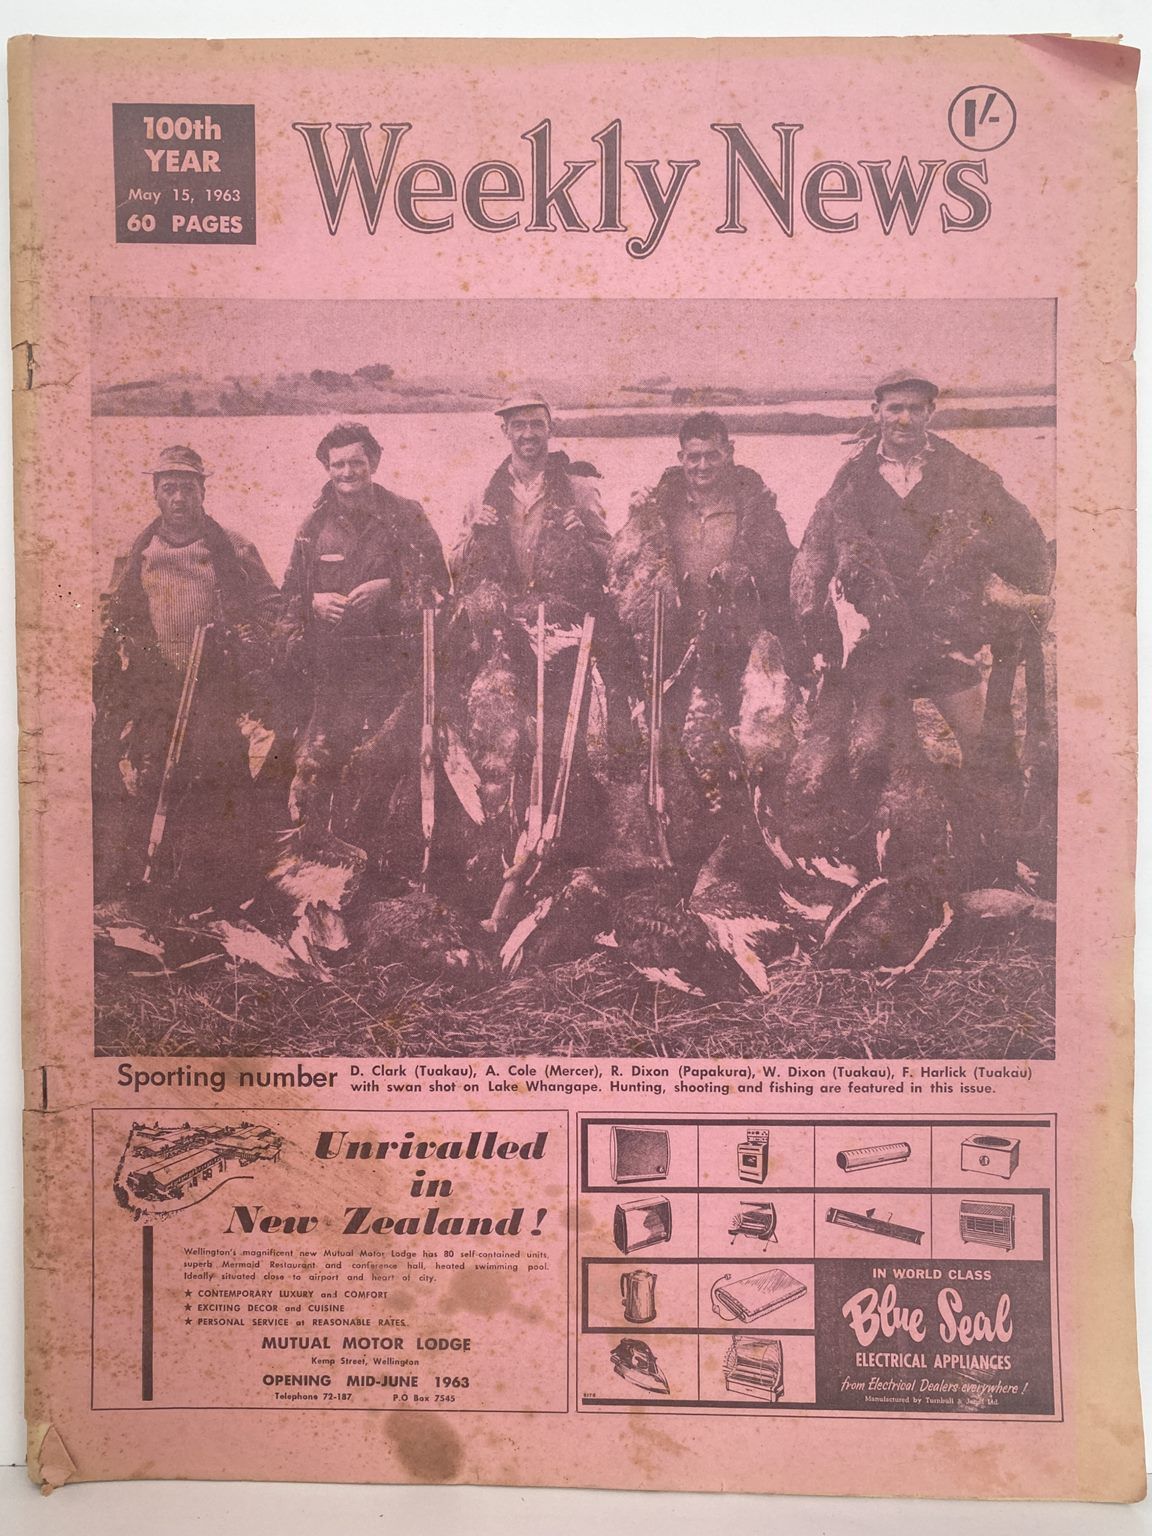 OLD NEWSPAPER: Weekly News - 15 May 1963